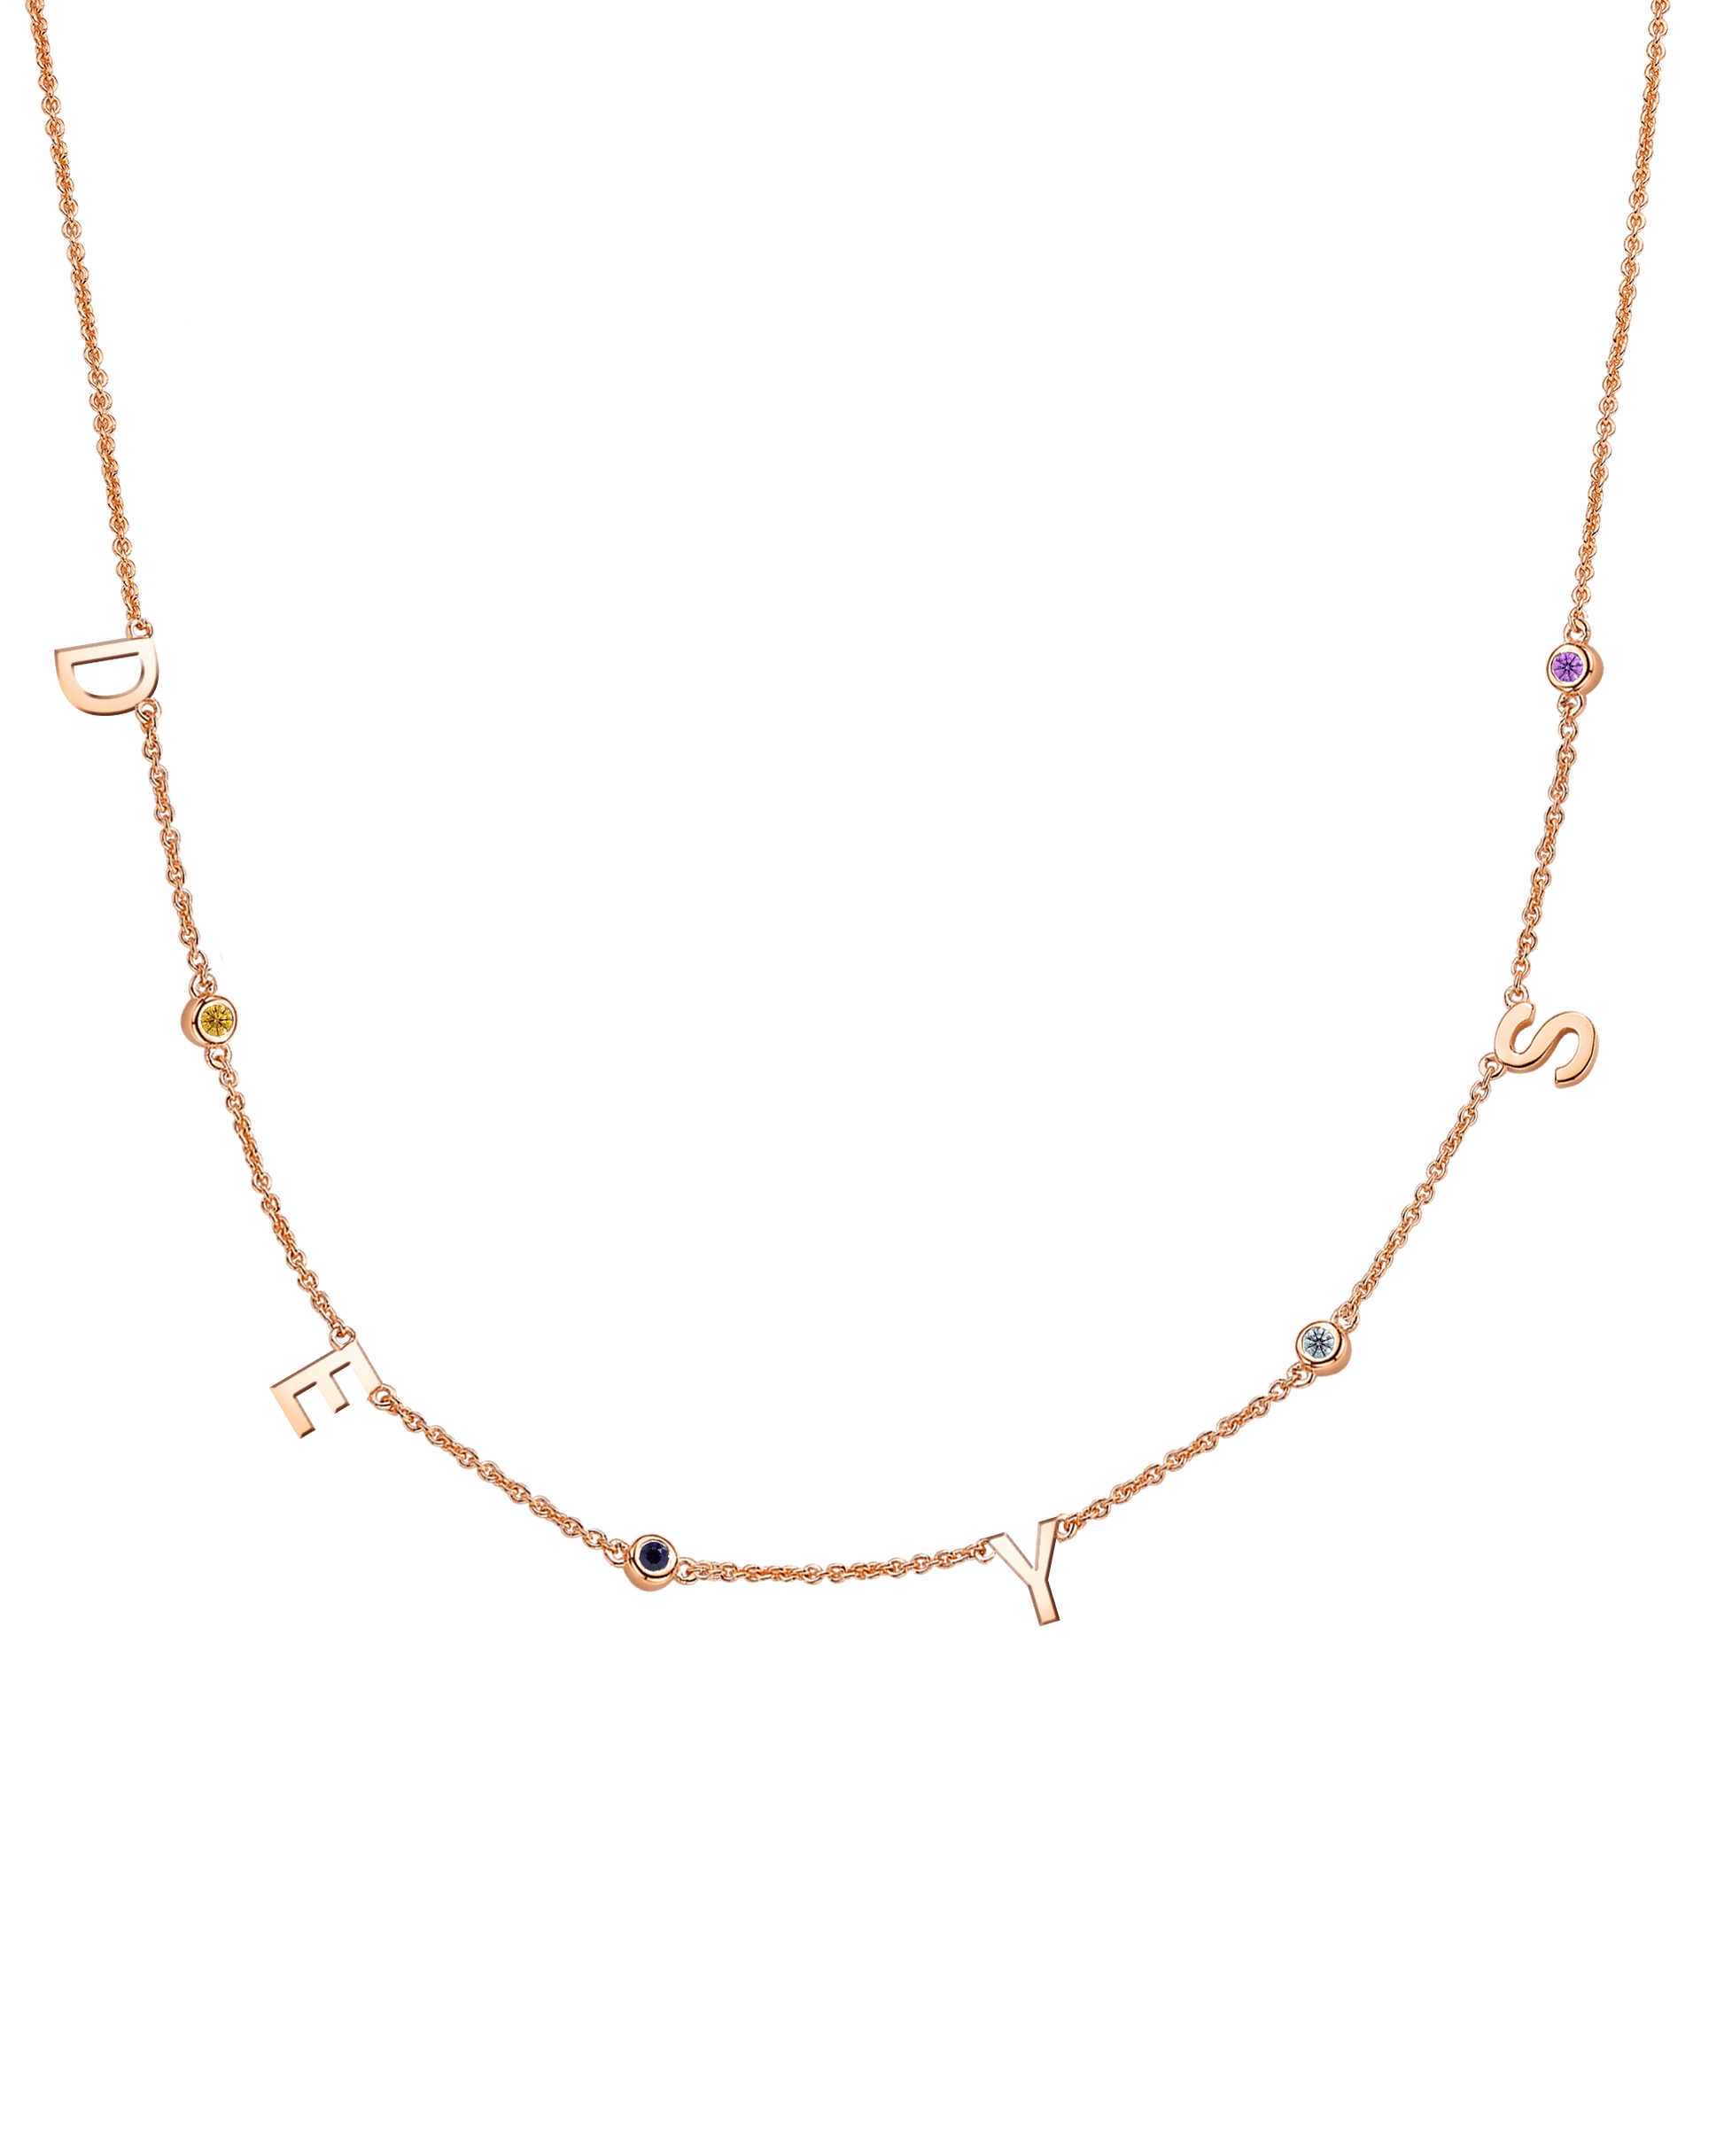 Initial Birthstone Necklace - 14K Rose Gold Necklaces magal-dev 4 Initials + 4 Birthstones Adjustable 16-17" (40cm-43cm) 